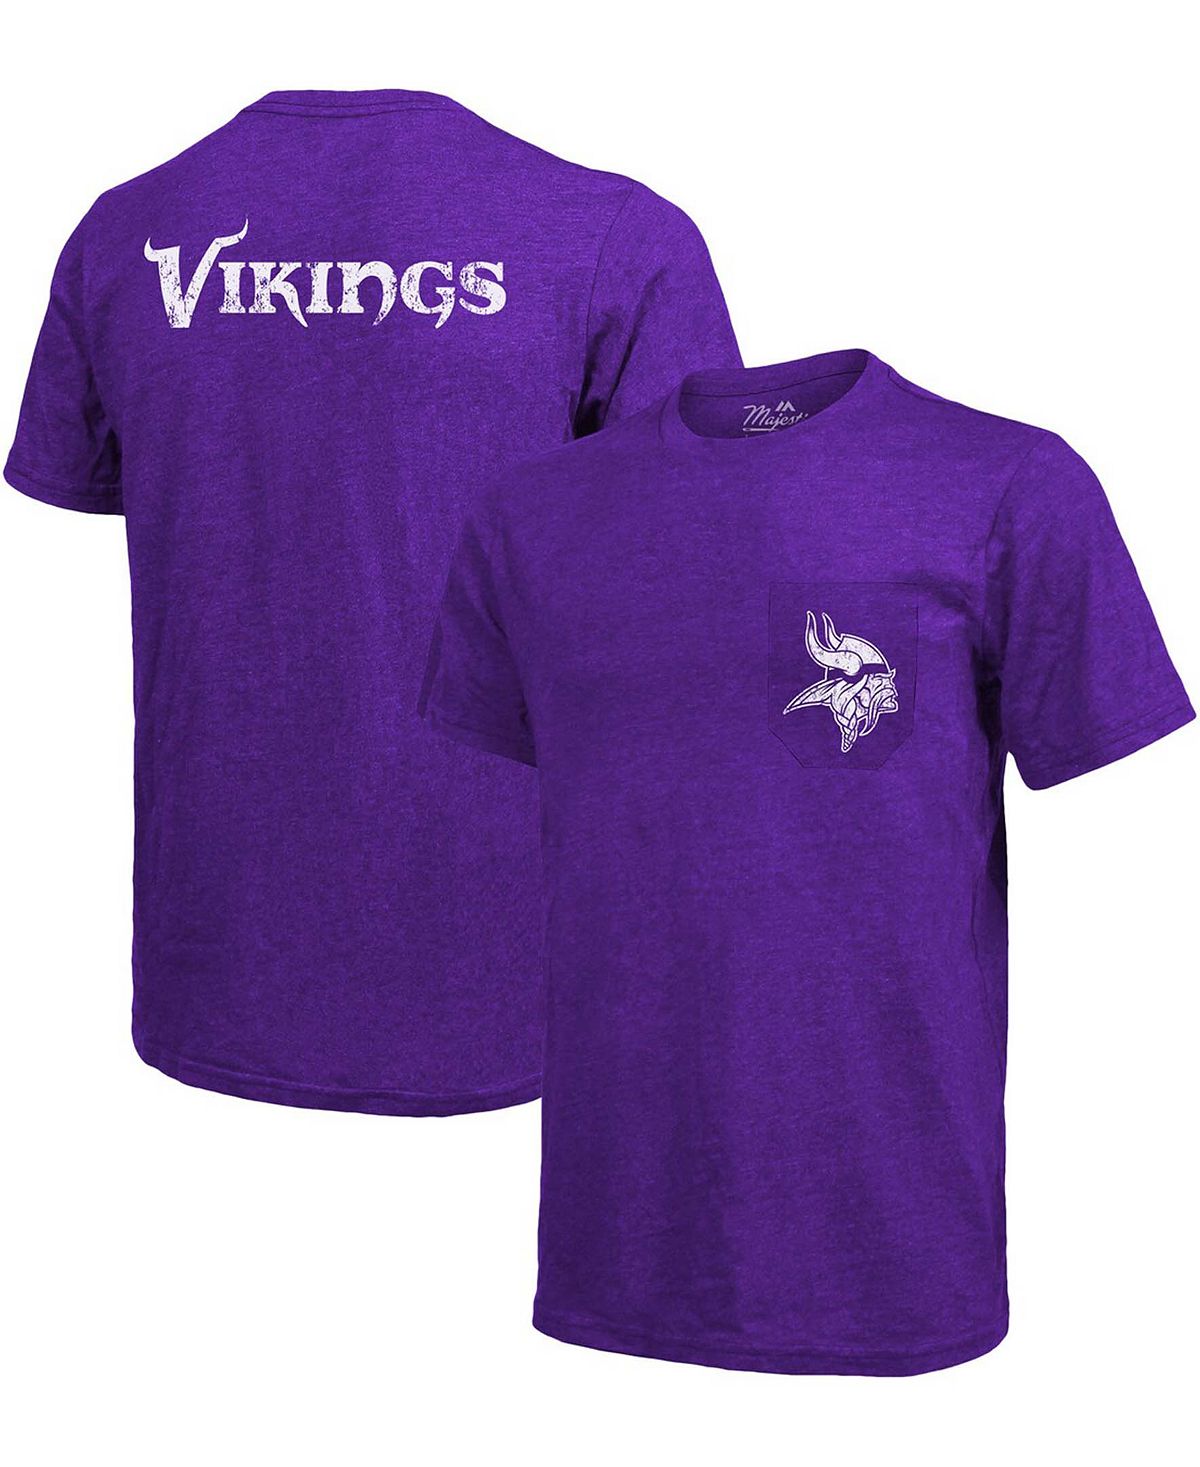 Футболка minnesota vikings tri-blend pocket pocket - пурпурный Majestic, фиолетовый футболка с карманами tri blend threads cleveland browns коричневый majestic